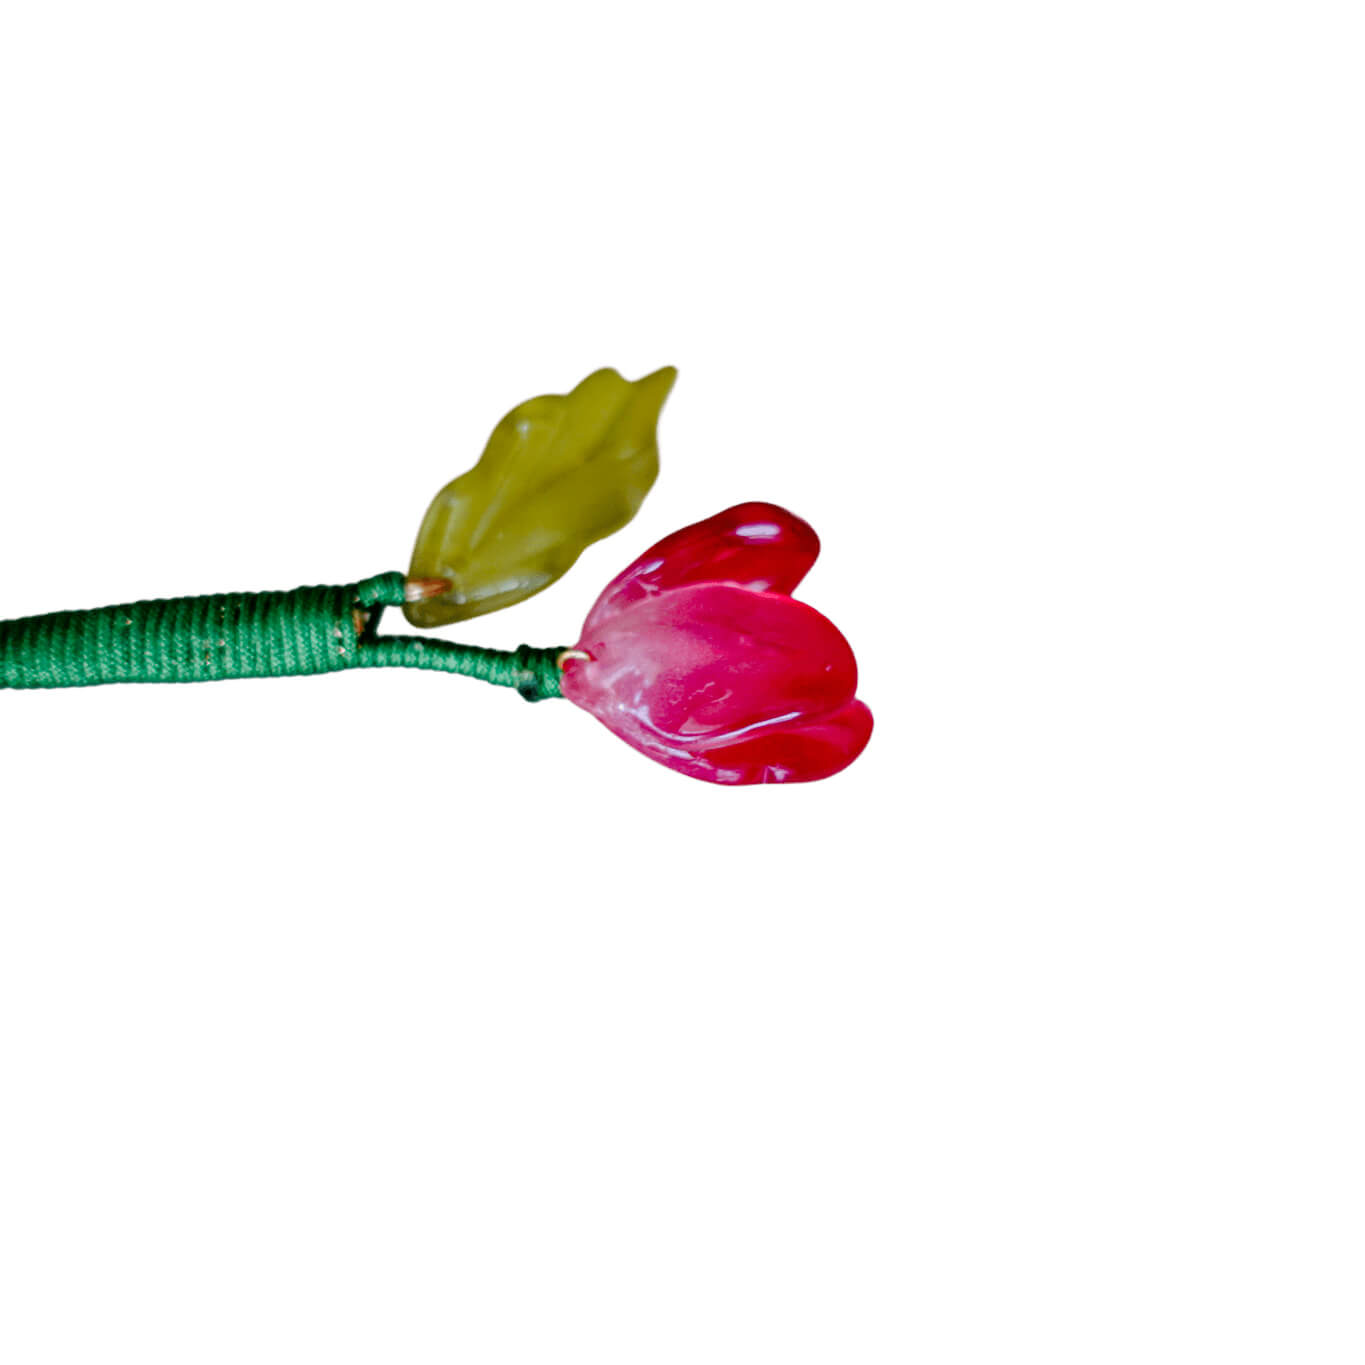 MAN - Romantic Tulip Hairpin